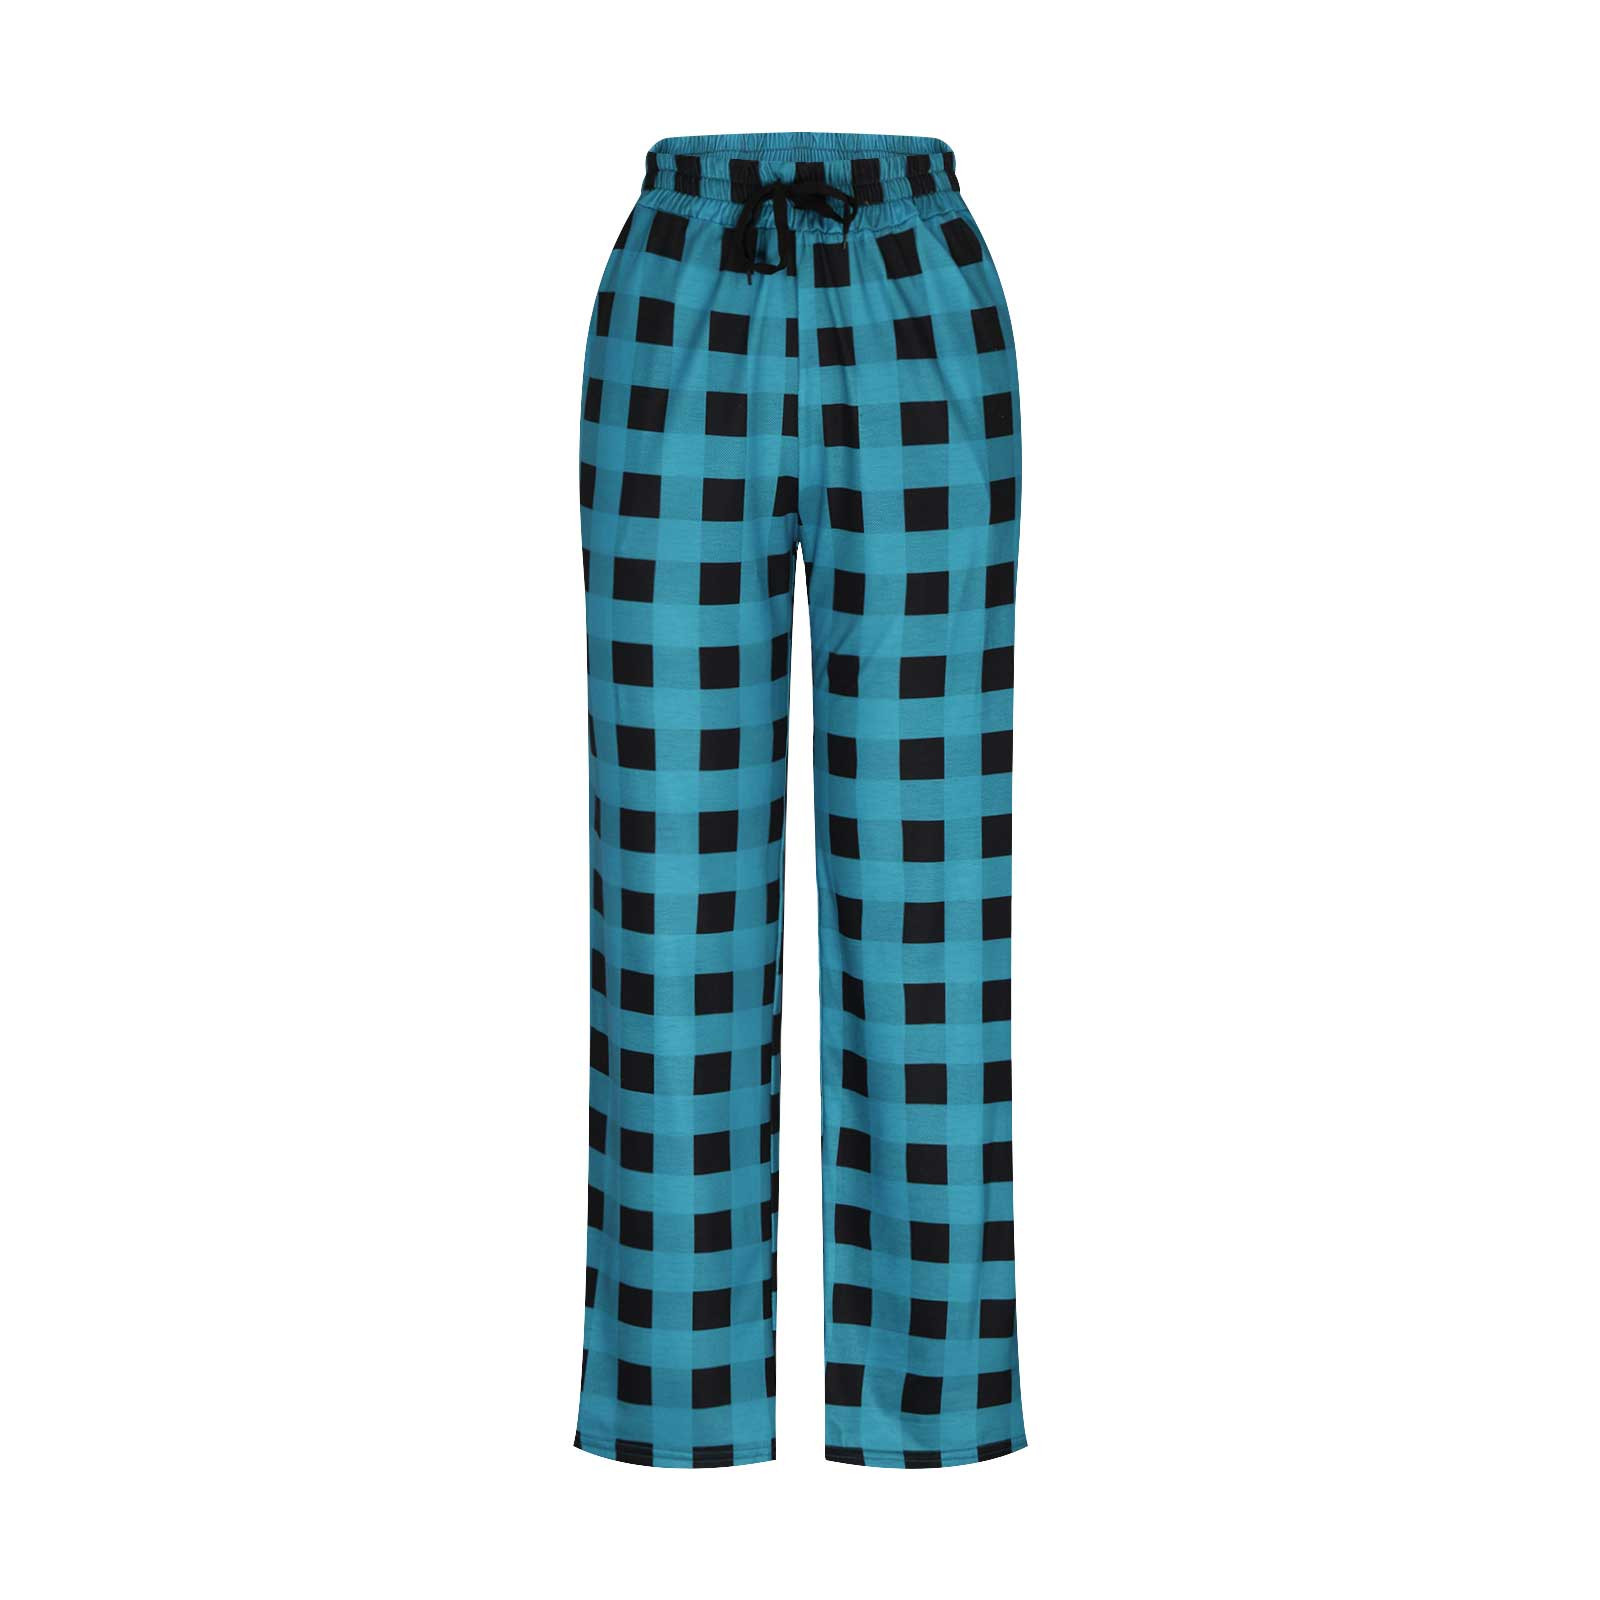 Aloohaidyvio Men's Pajama Pants Cotton Flannel Plaid Lounge Fleece Warm ...